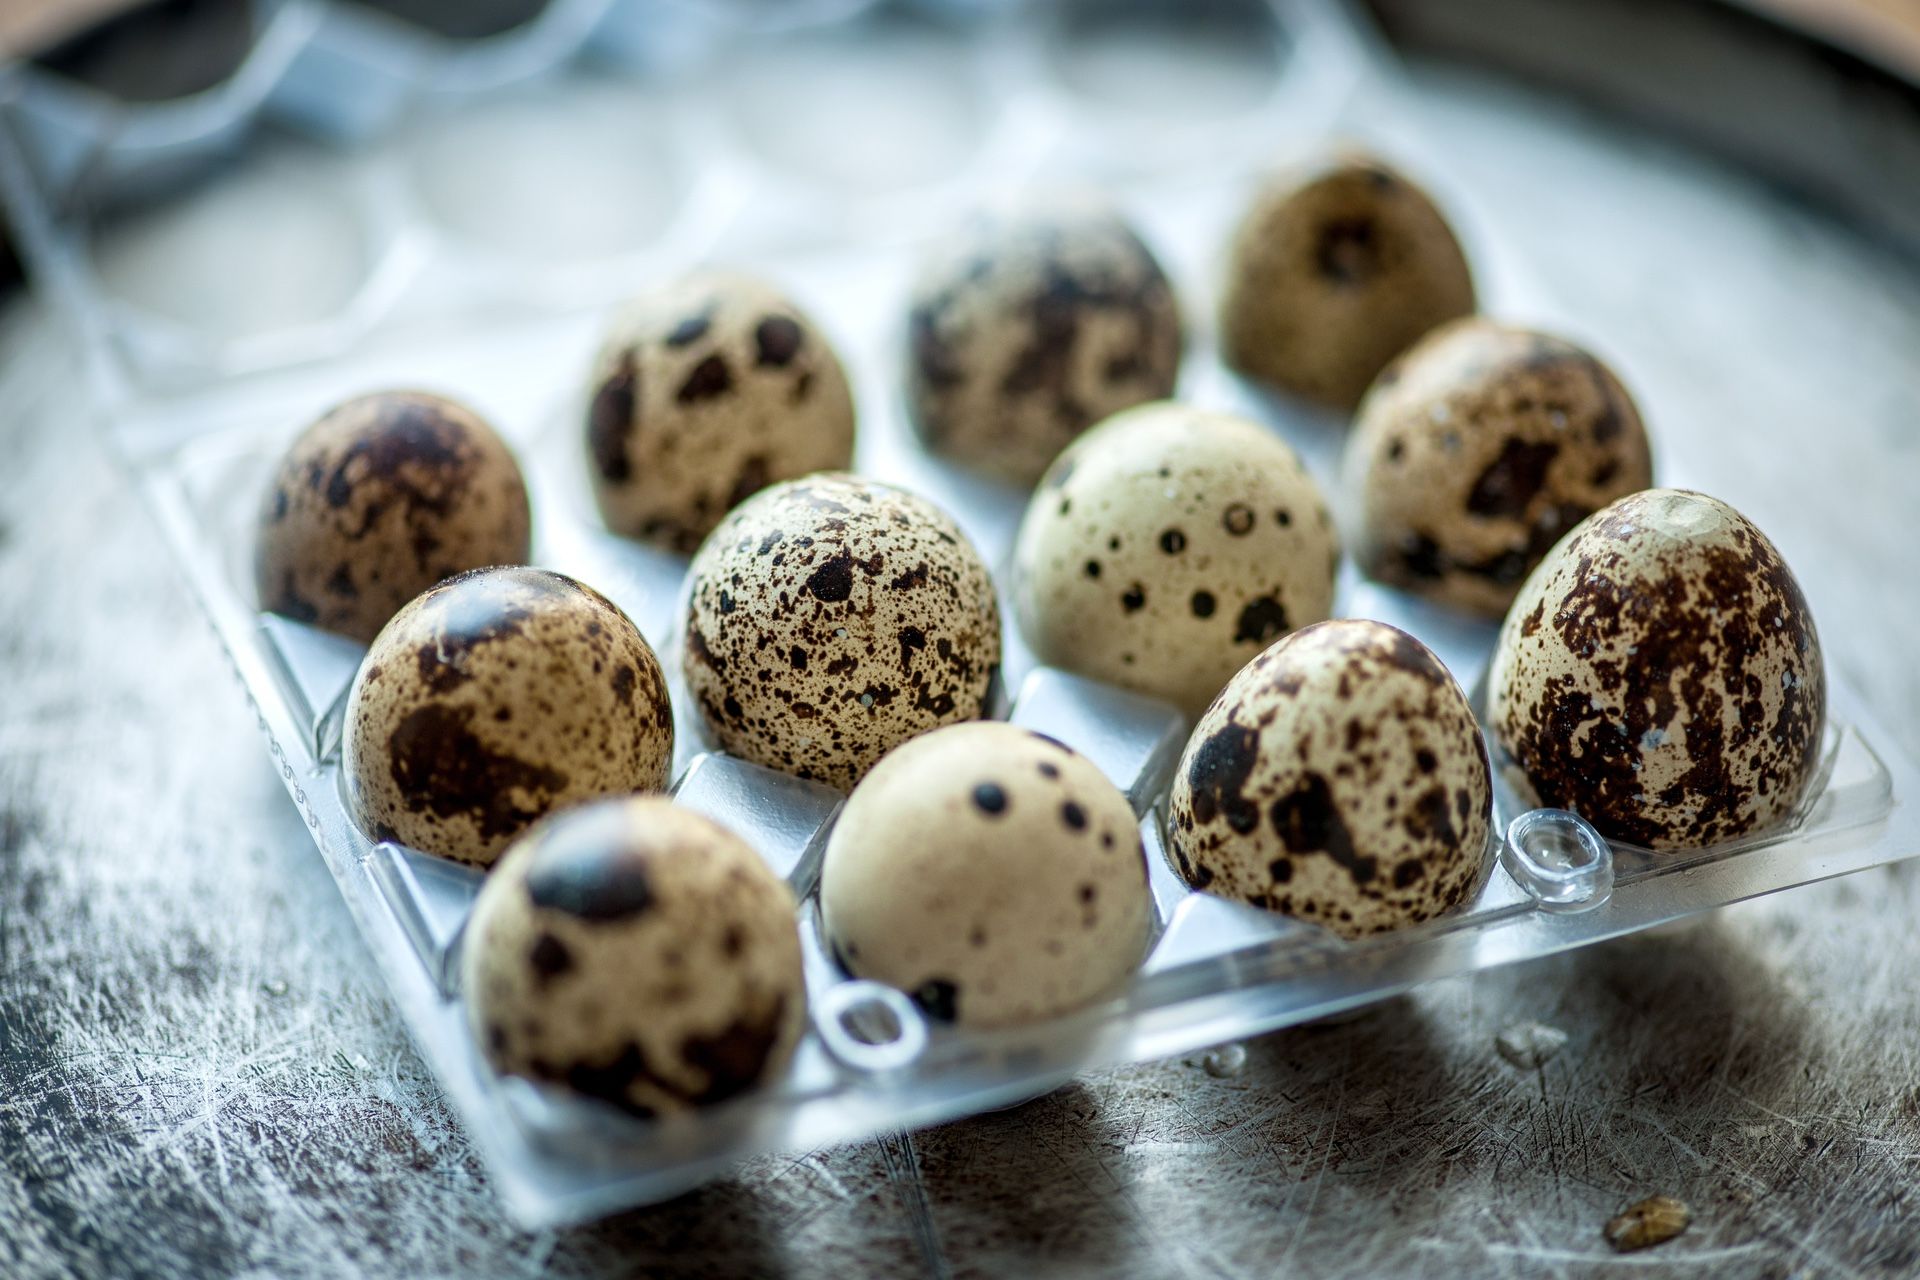 Jumbo Coturnix Quail Hatching Eggs 